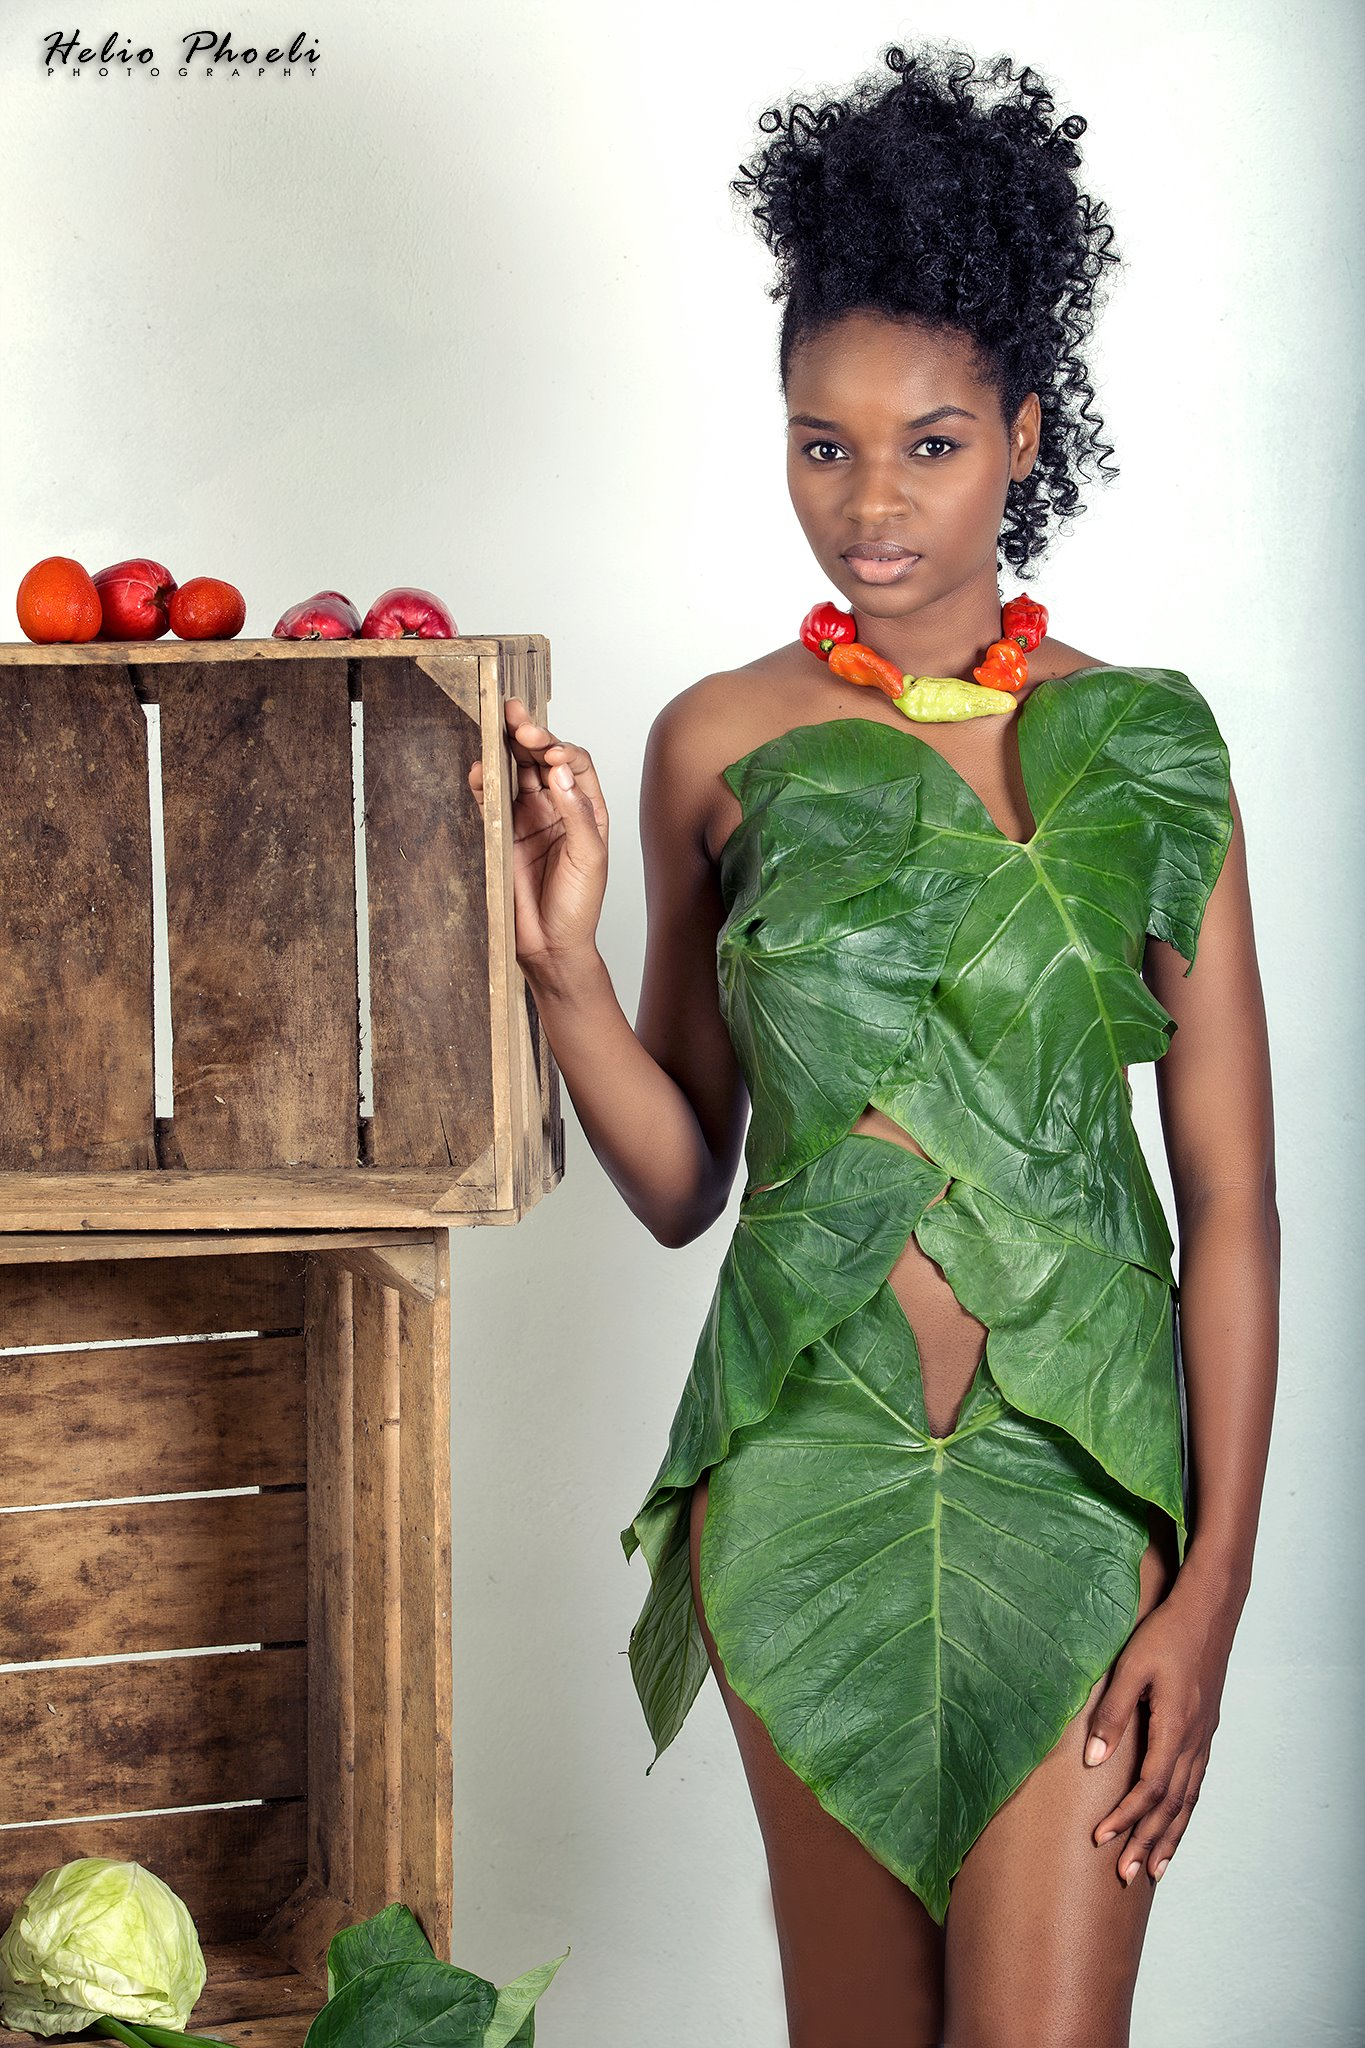 Alt Helio Phoeli Vegetables Photoshoot Suriname Fashion week 2014